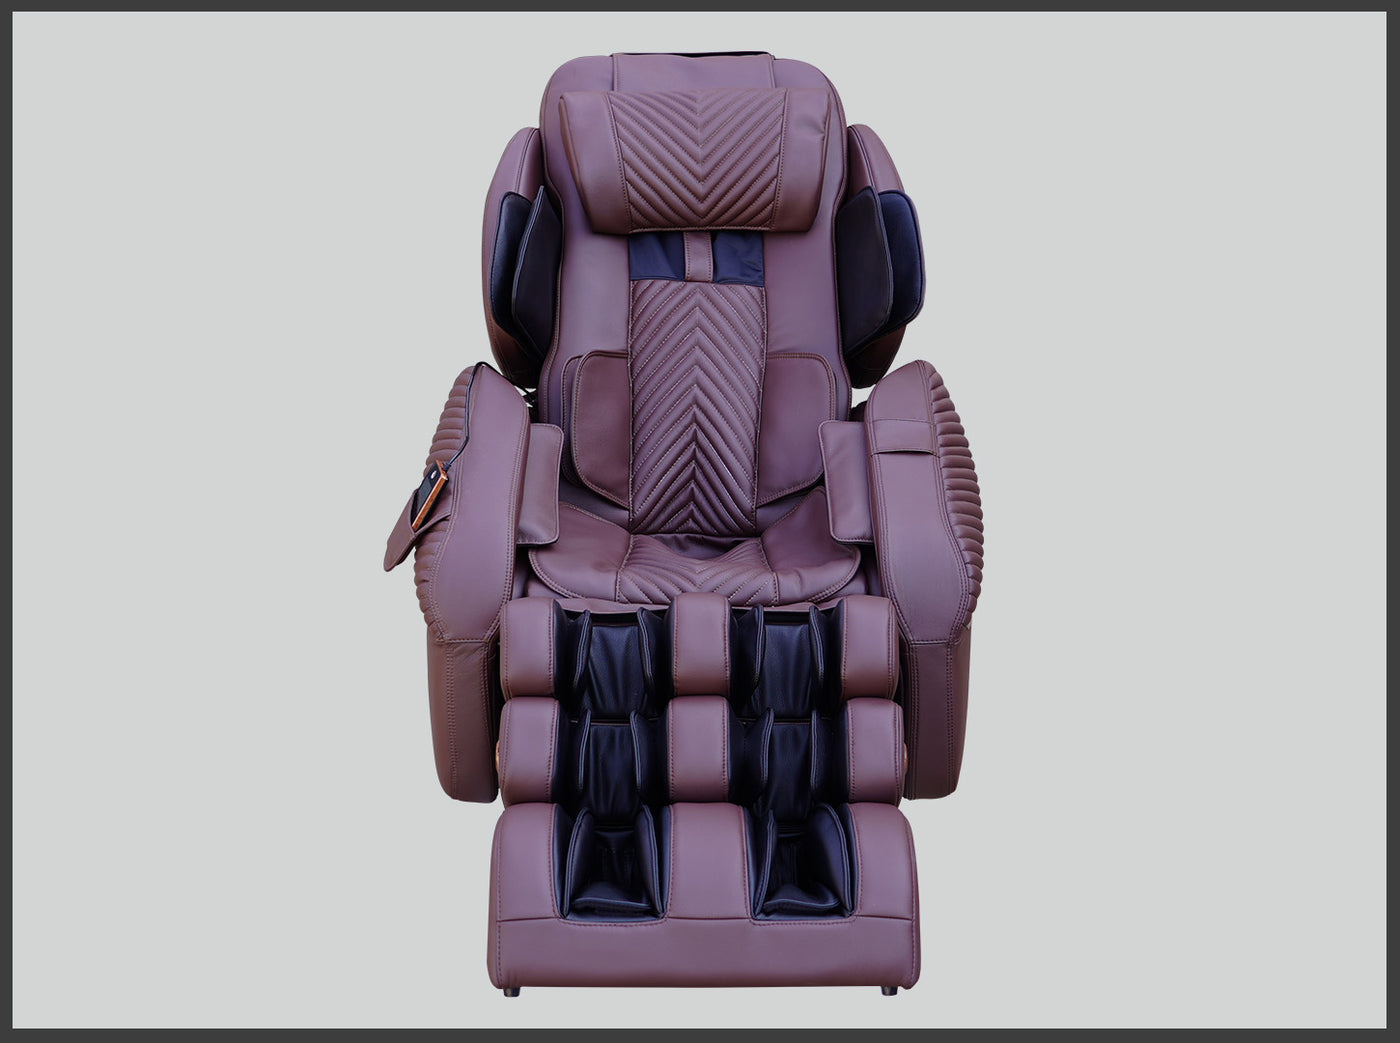 Luraco iRobotics 9 MAX Medical Massage Chair